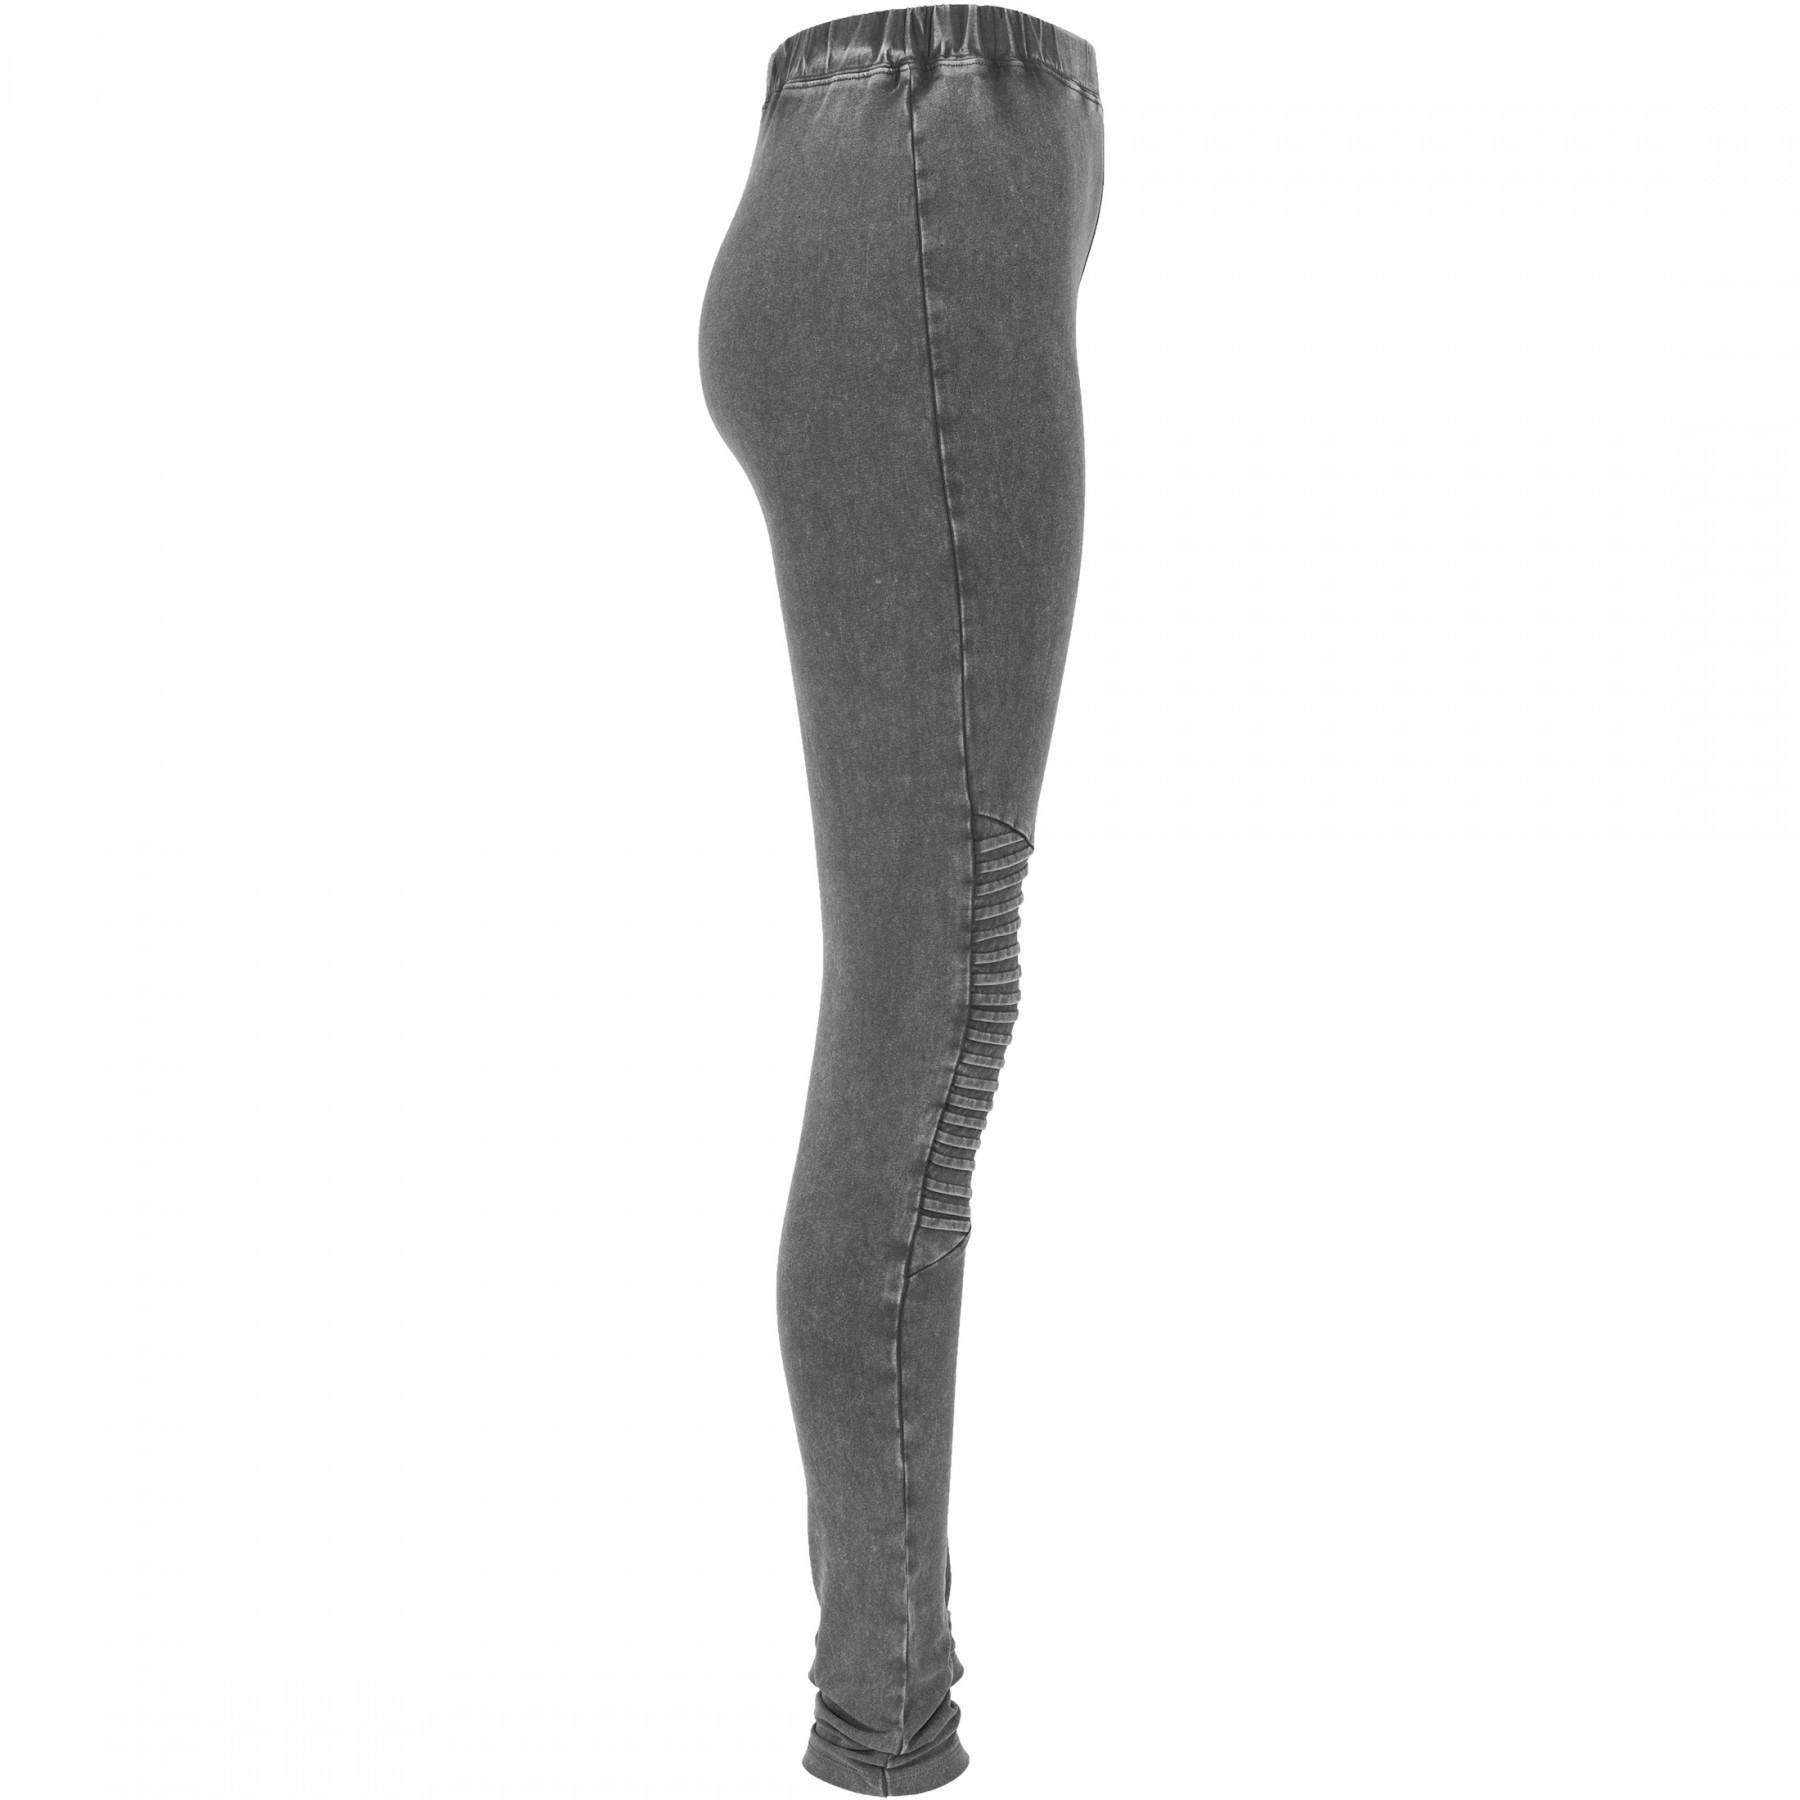 Legging woman jeans clássico urbano